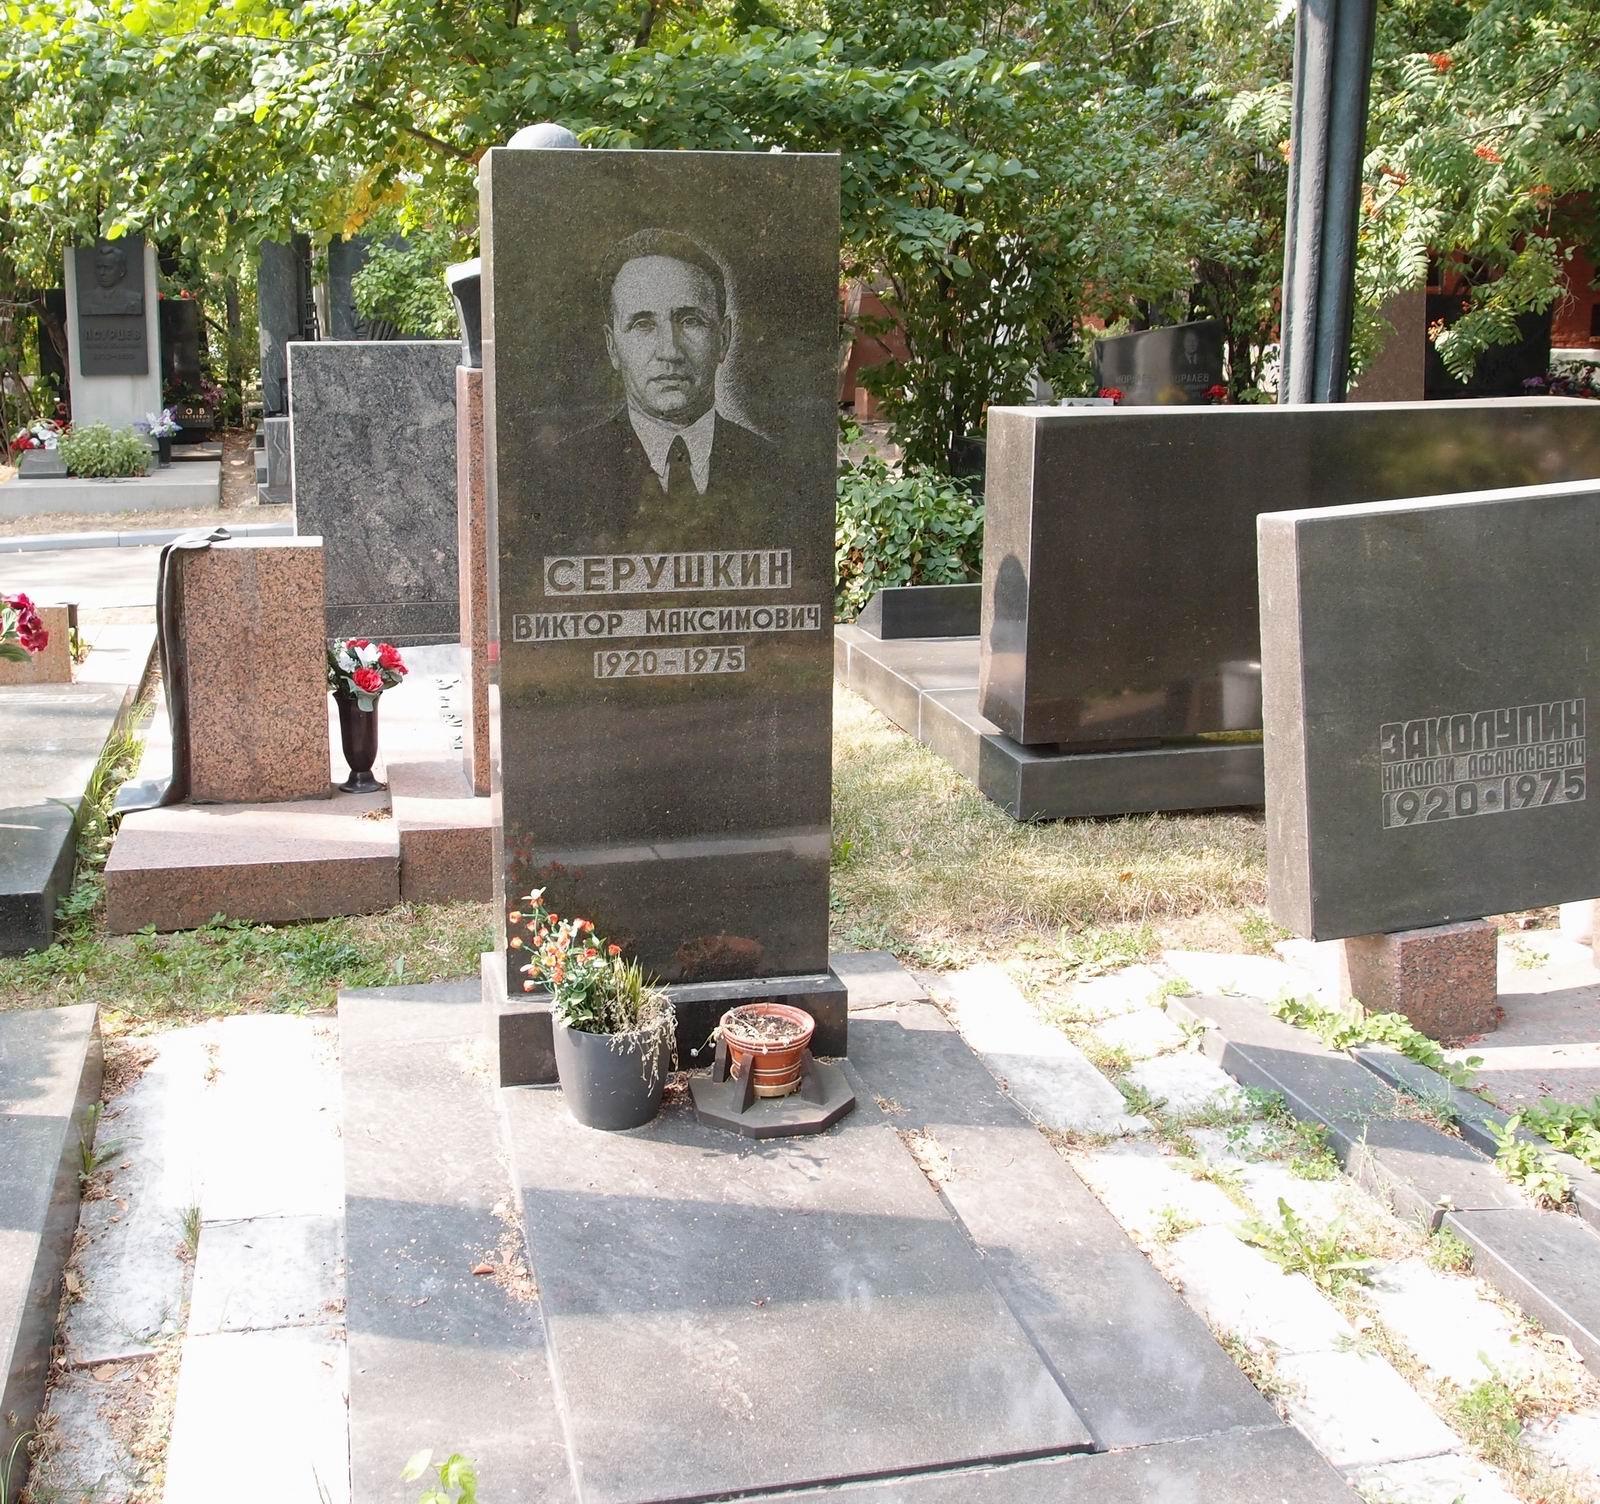 Памятник на могиле Серушкина В.М. (1920-1975), на Новодевичьем кладбище (9-1-4).